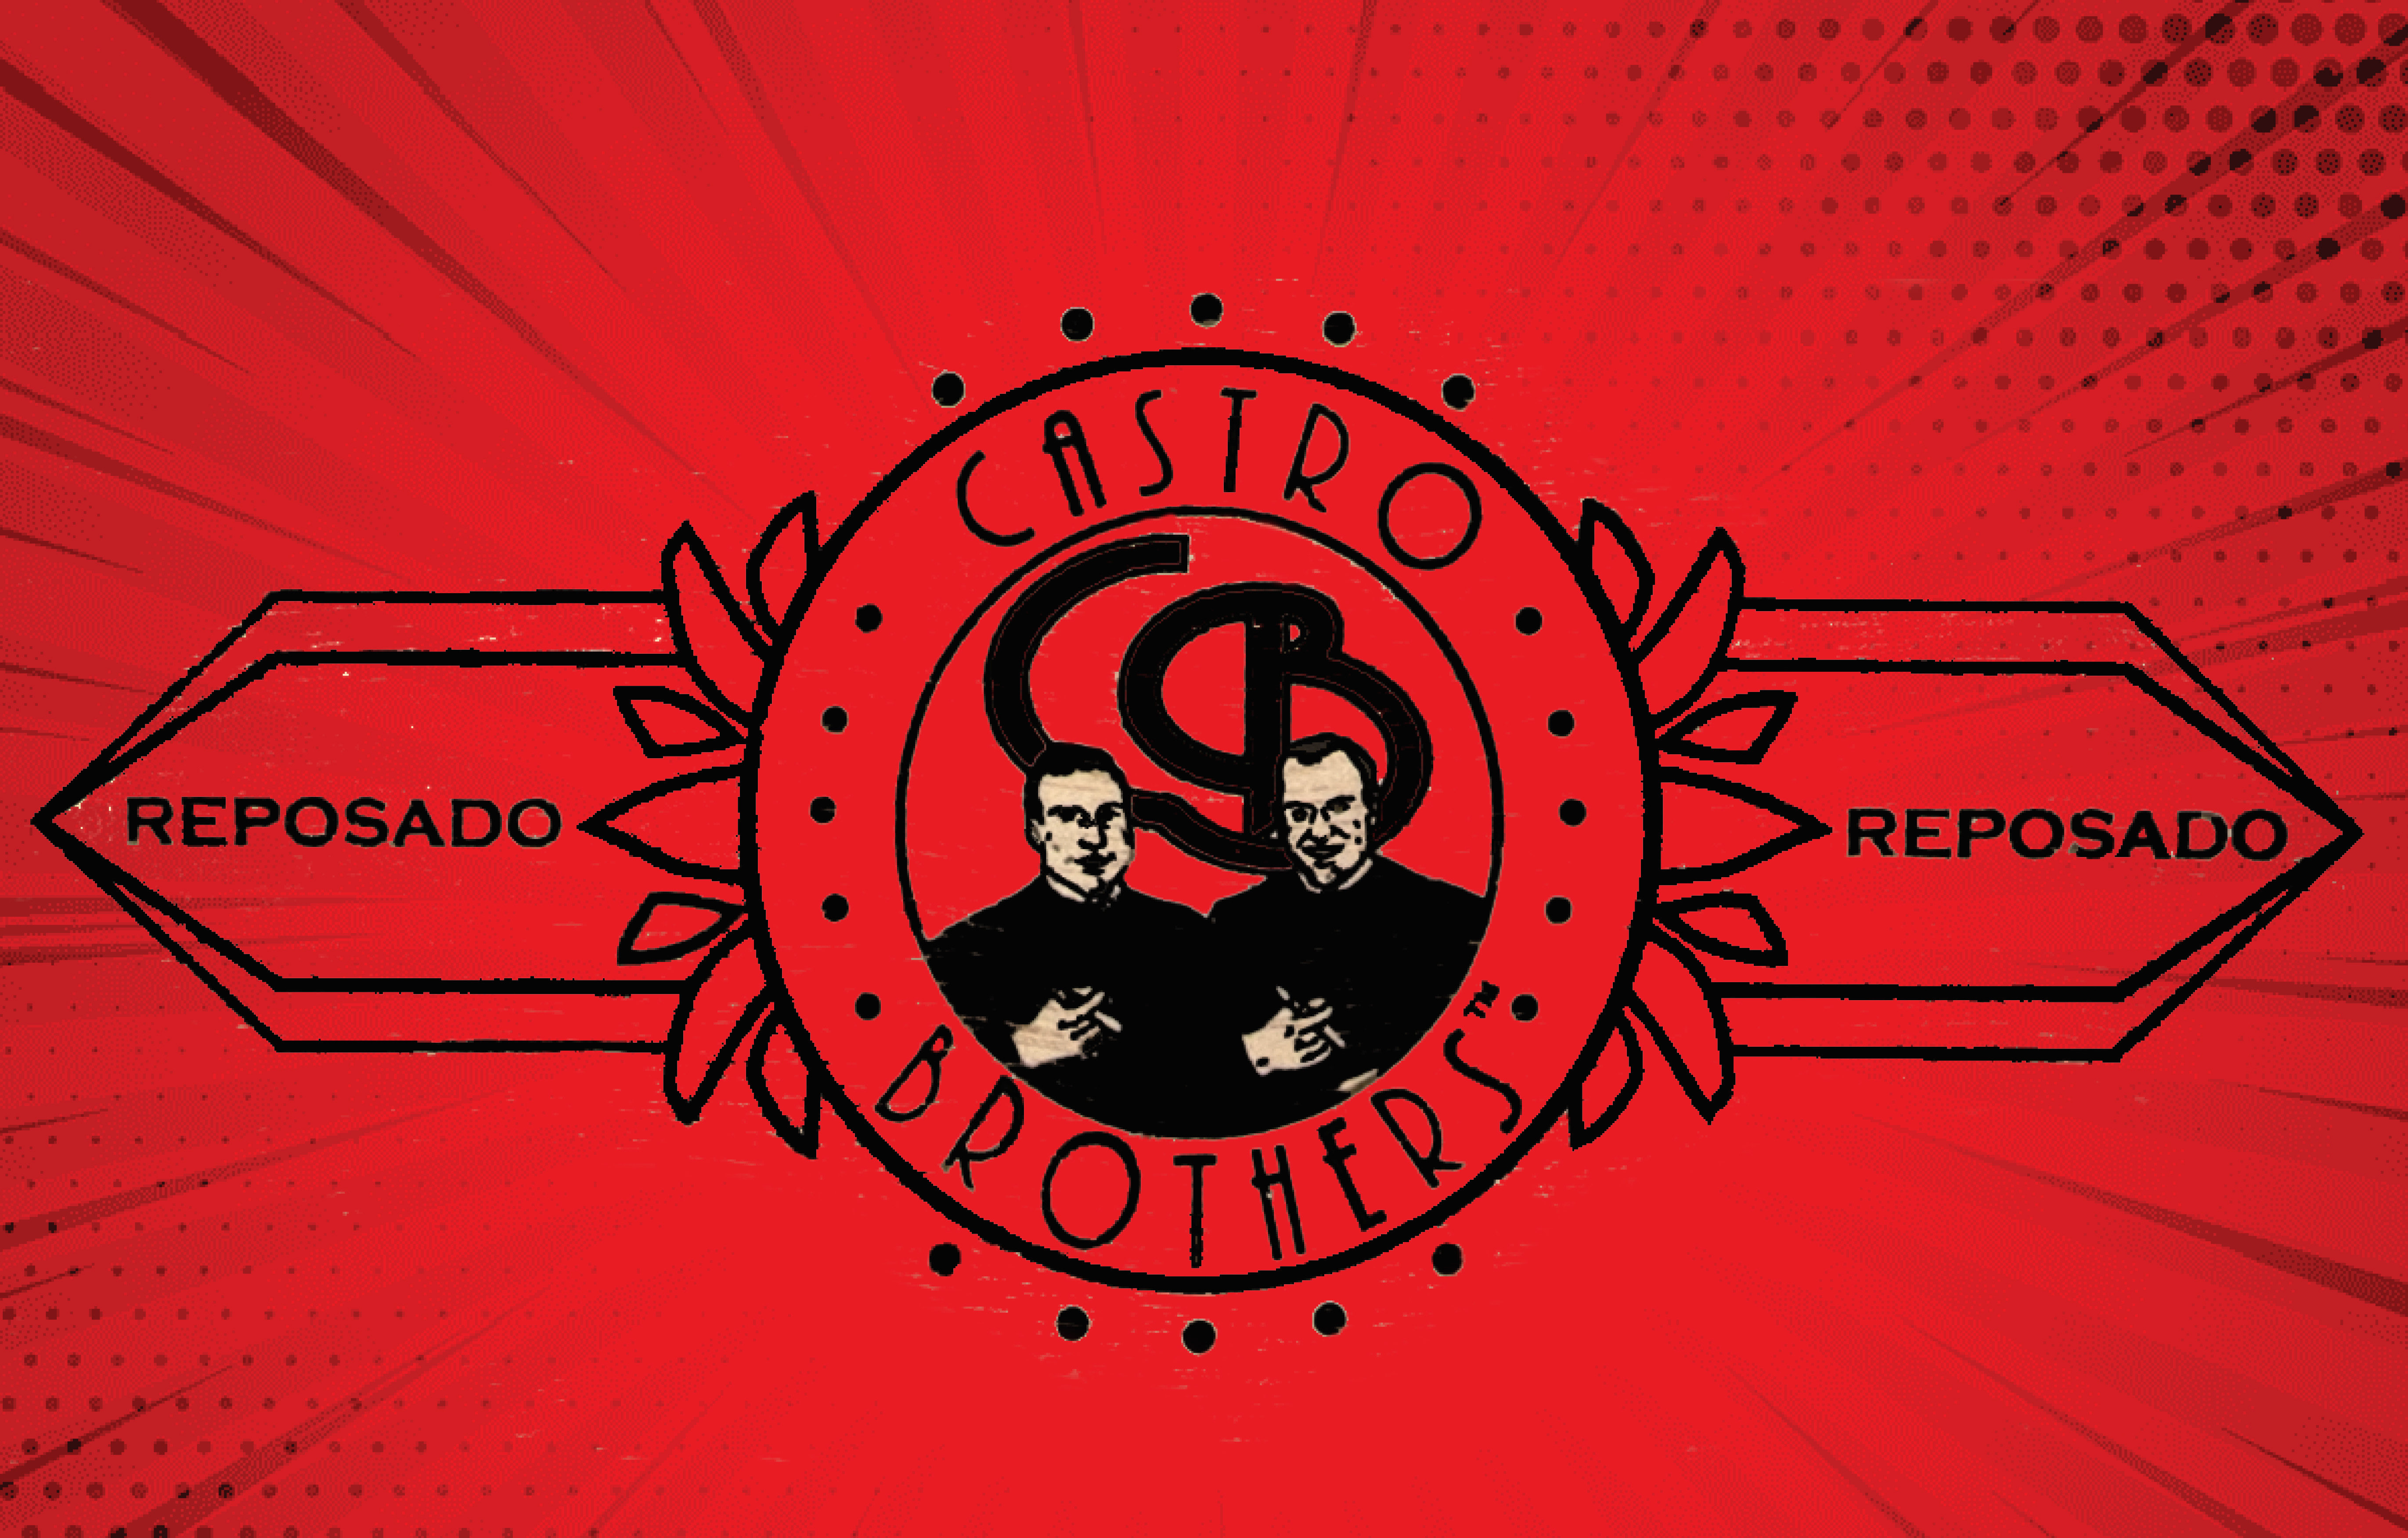 Castro Brothers Reposado